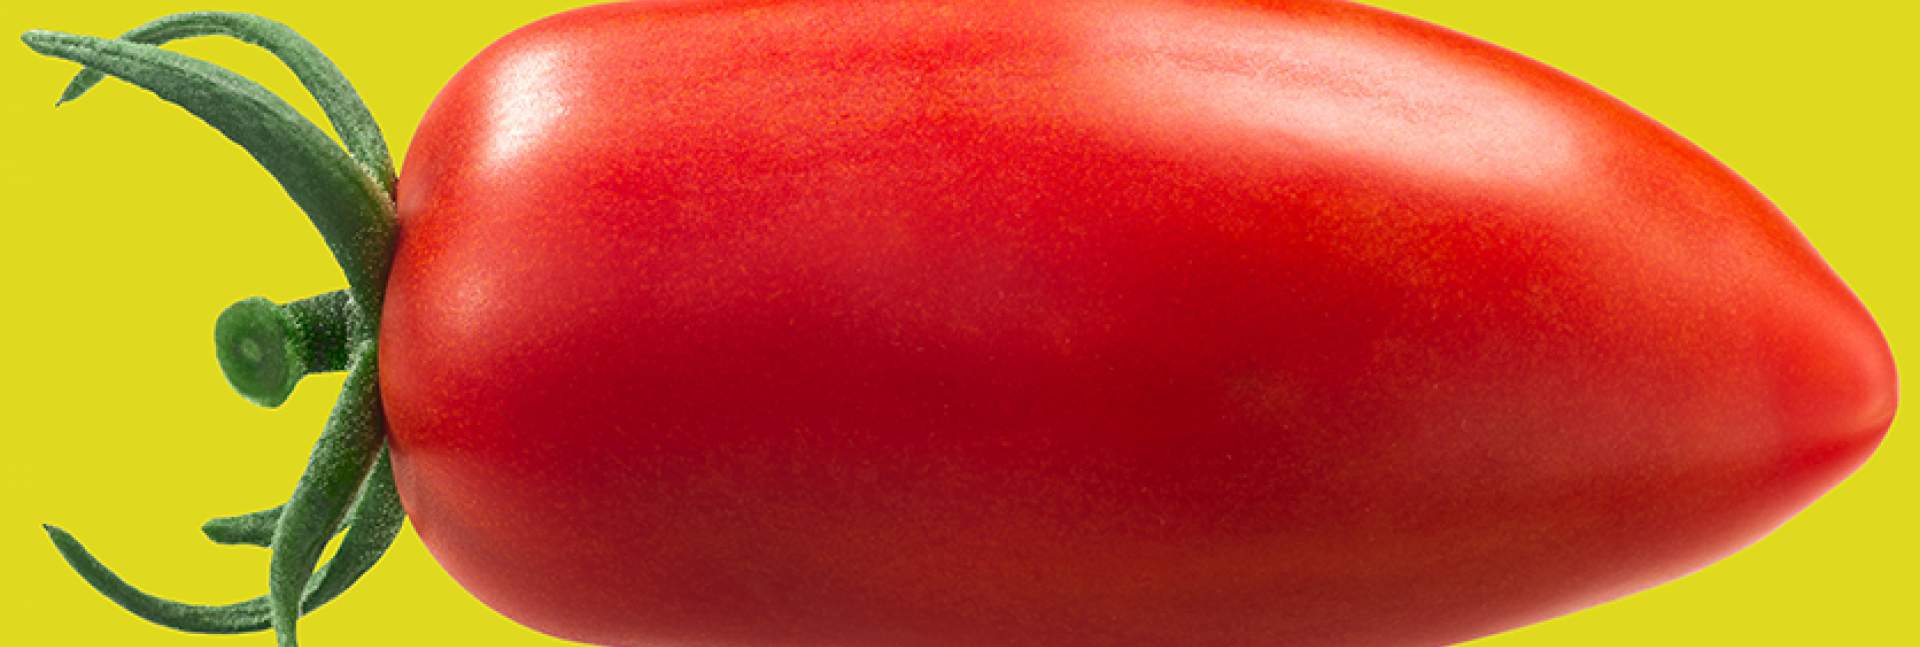 Tomato; Shutterstock